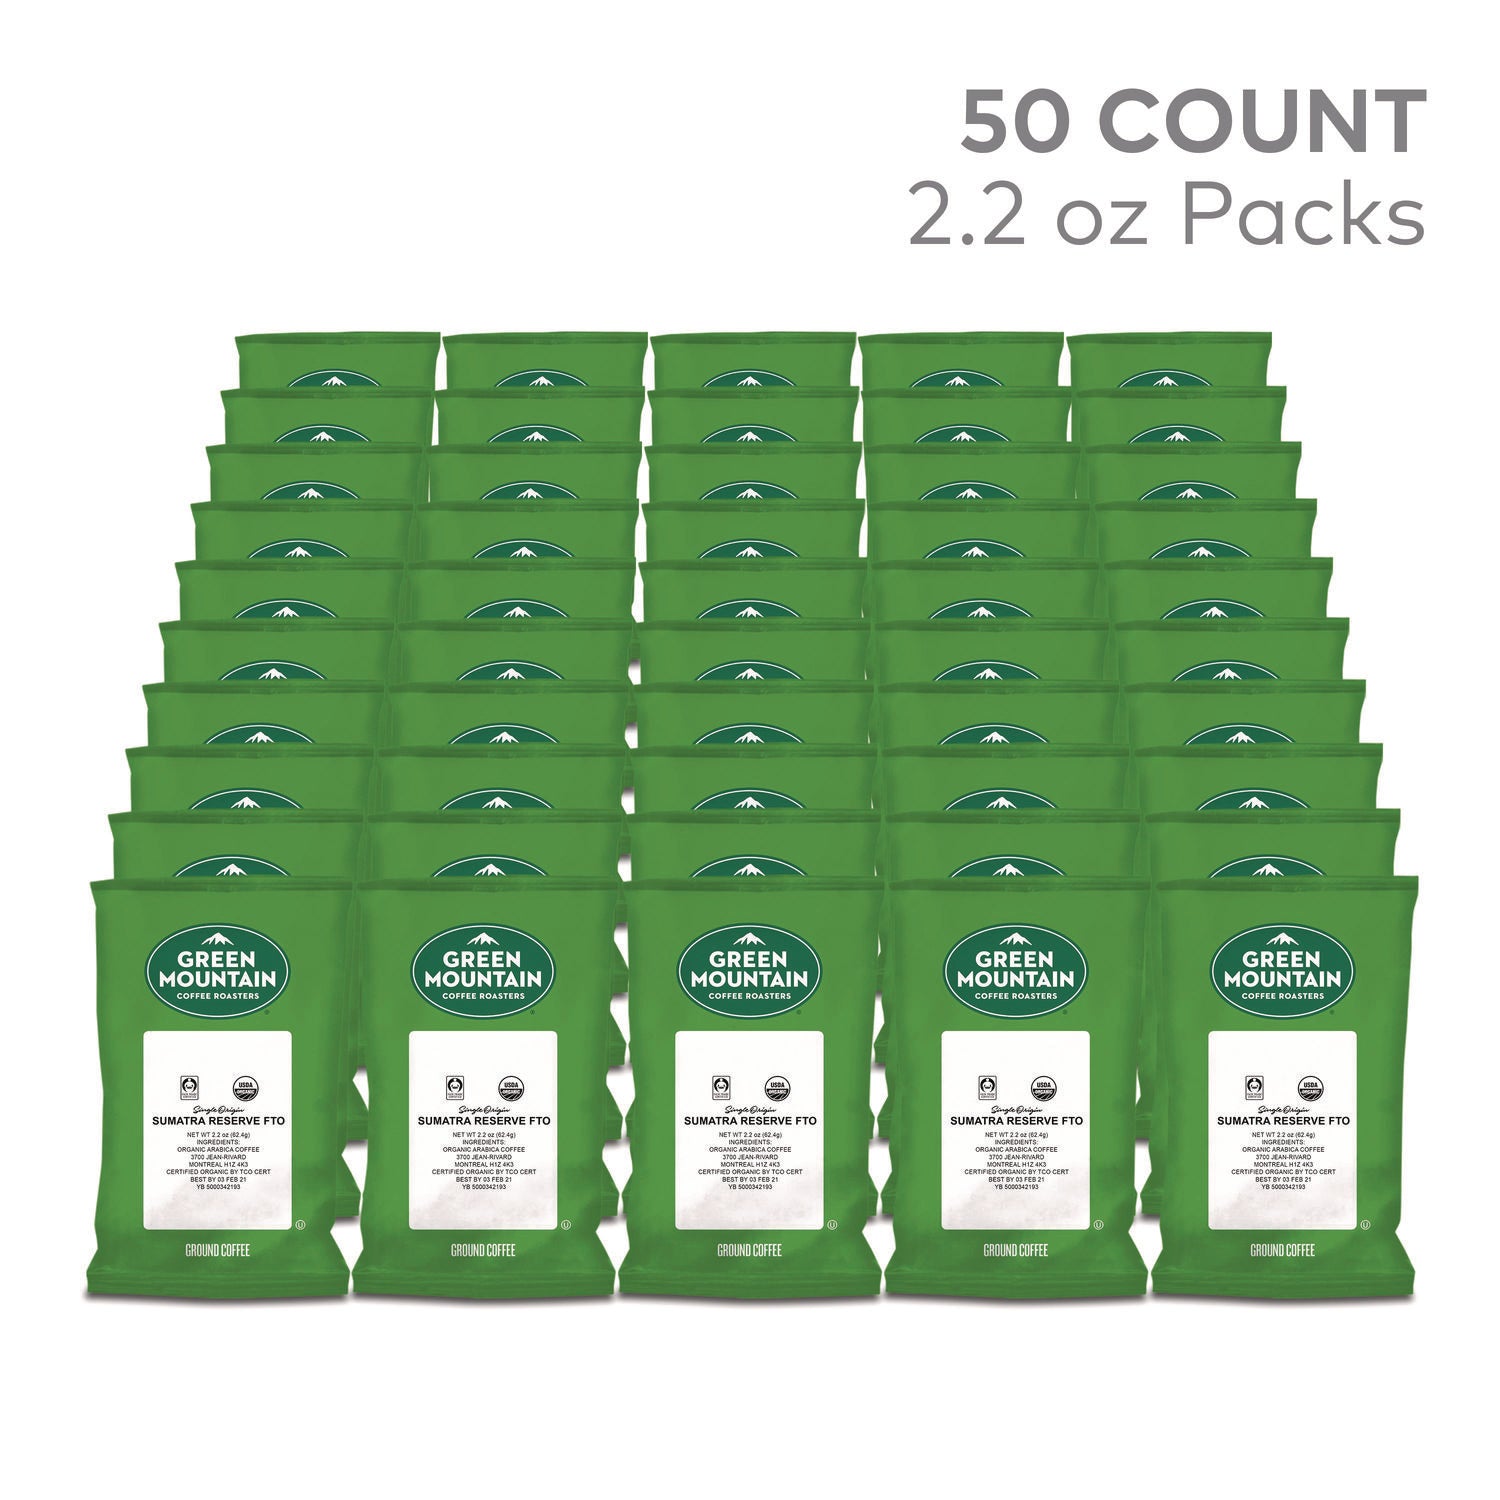 Sumatra Reserve Fraction Packs, 2.2 oz, 50/Carton - 5